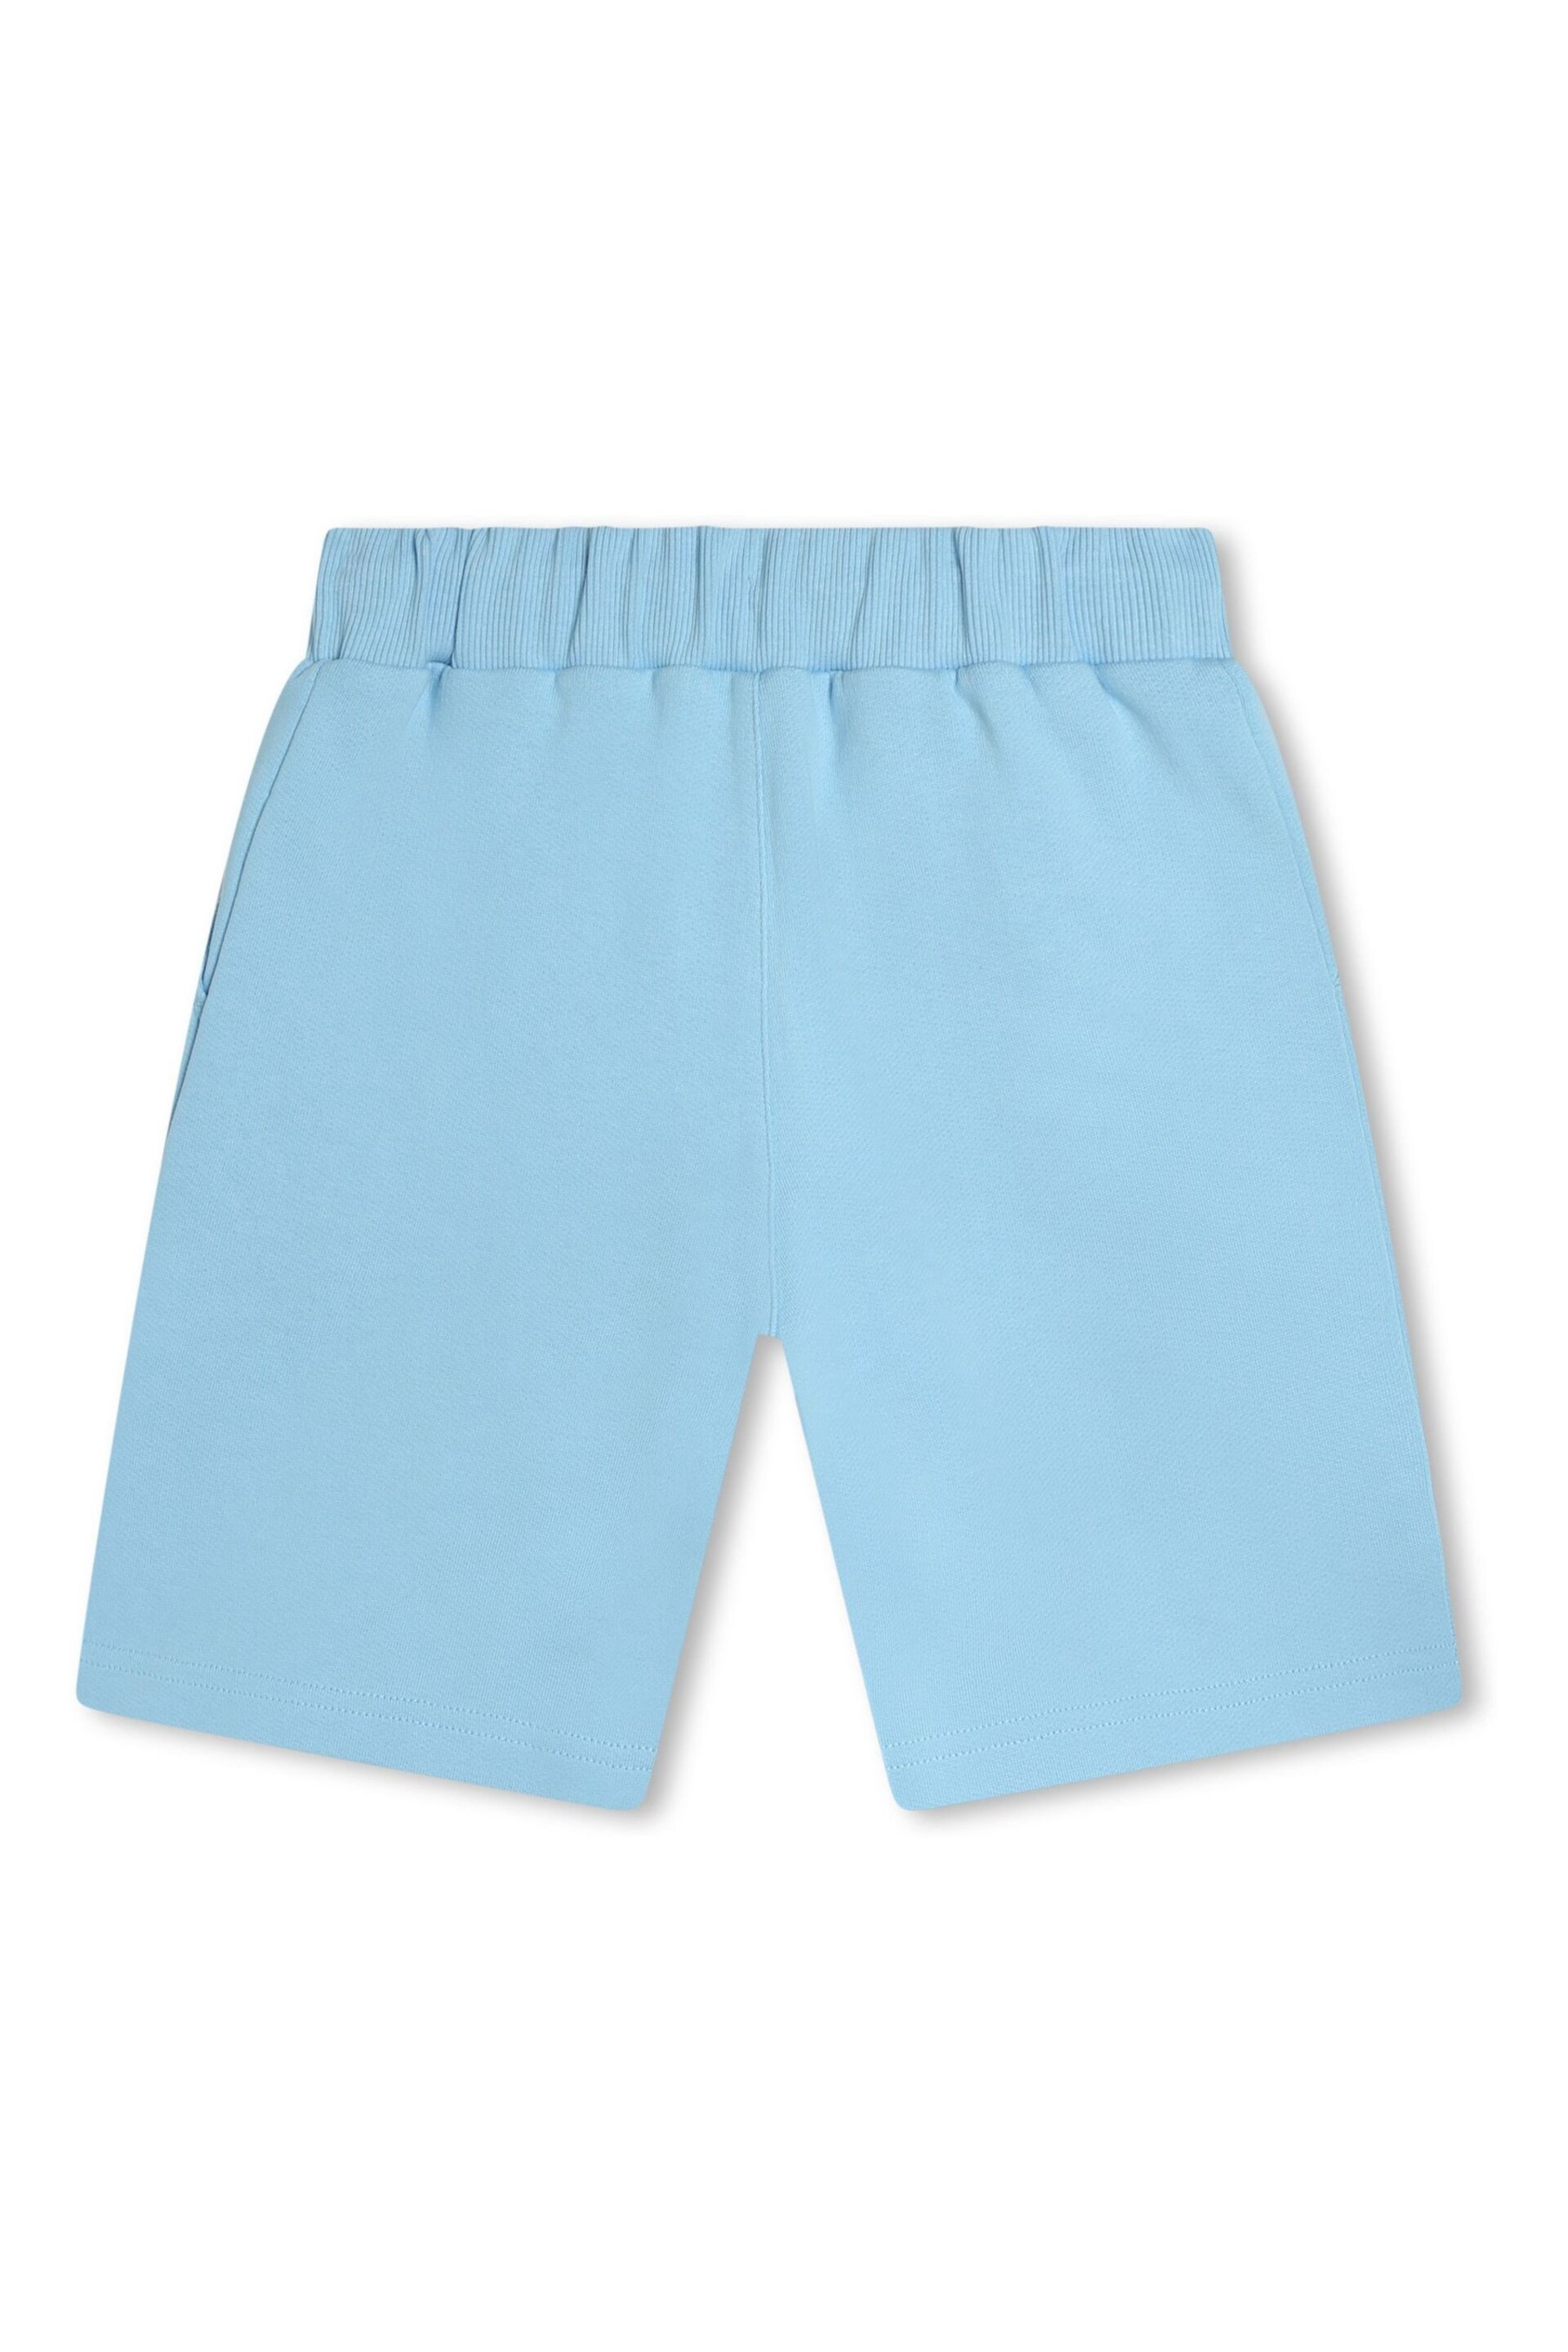 KENZO KIDS Blue Logo Jersey Shorts - Image 2 of 2